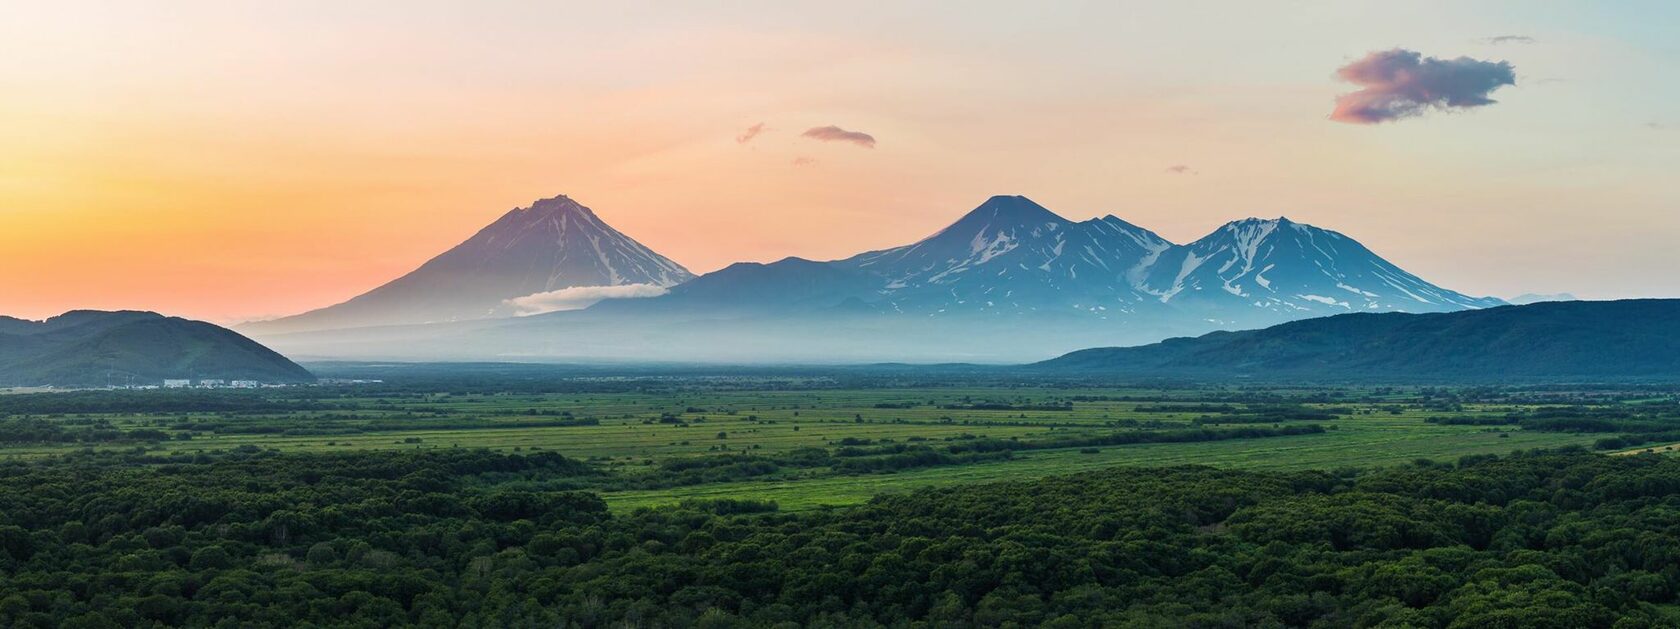 Вулканы Камчатки панорамная фотография